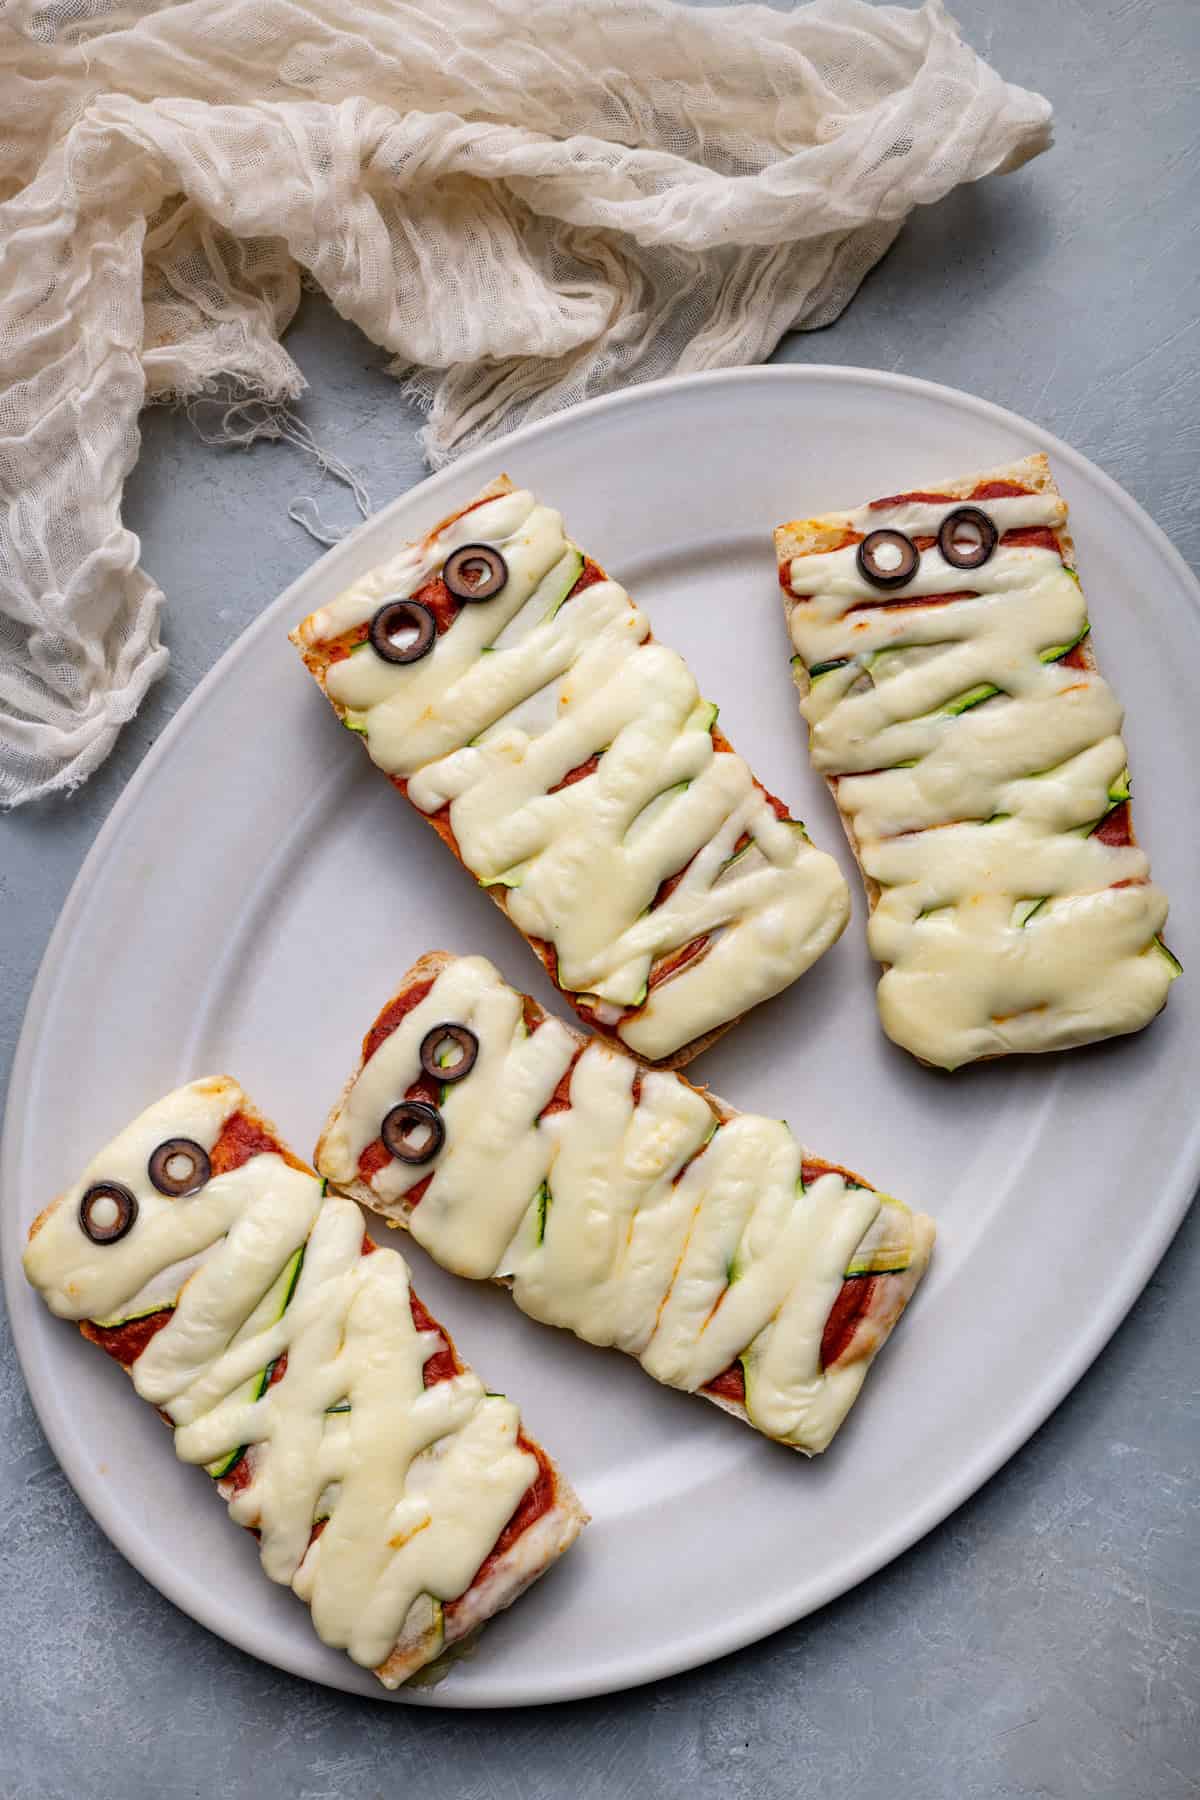 Mummy pizzas on a platter